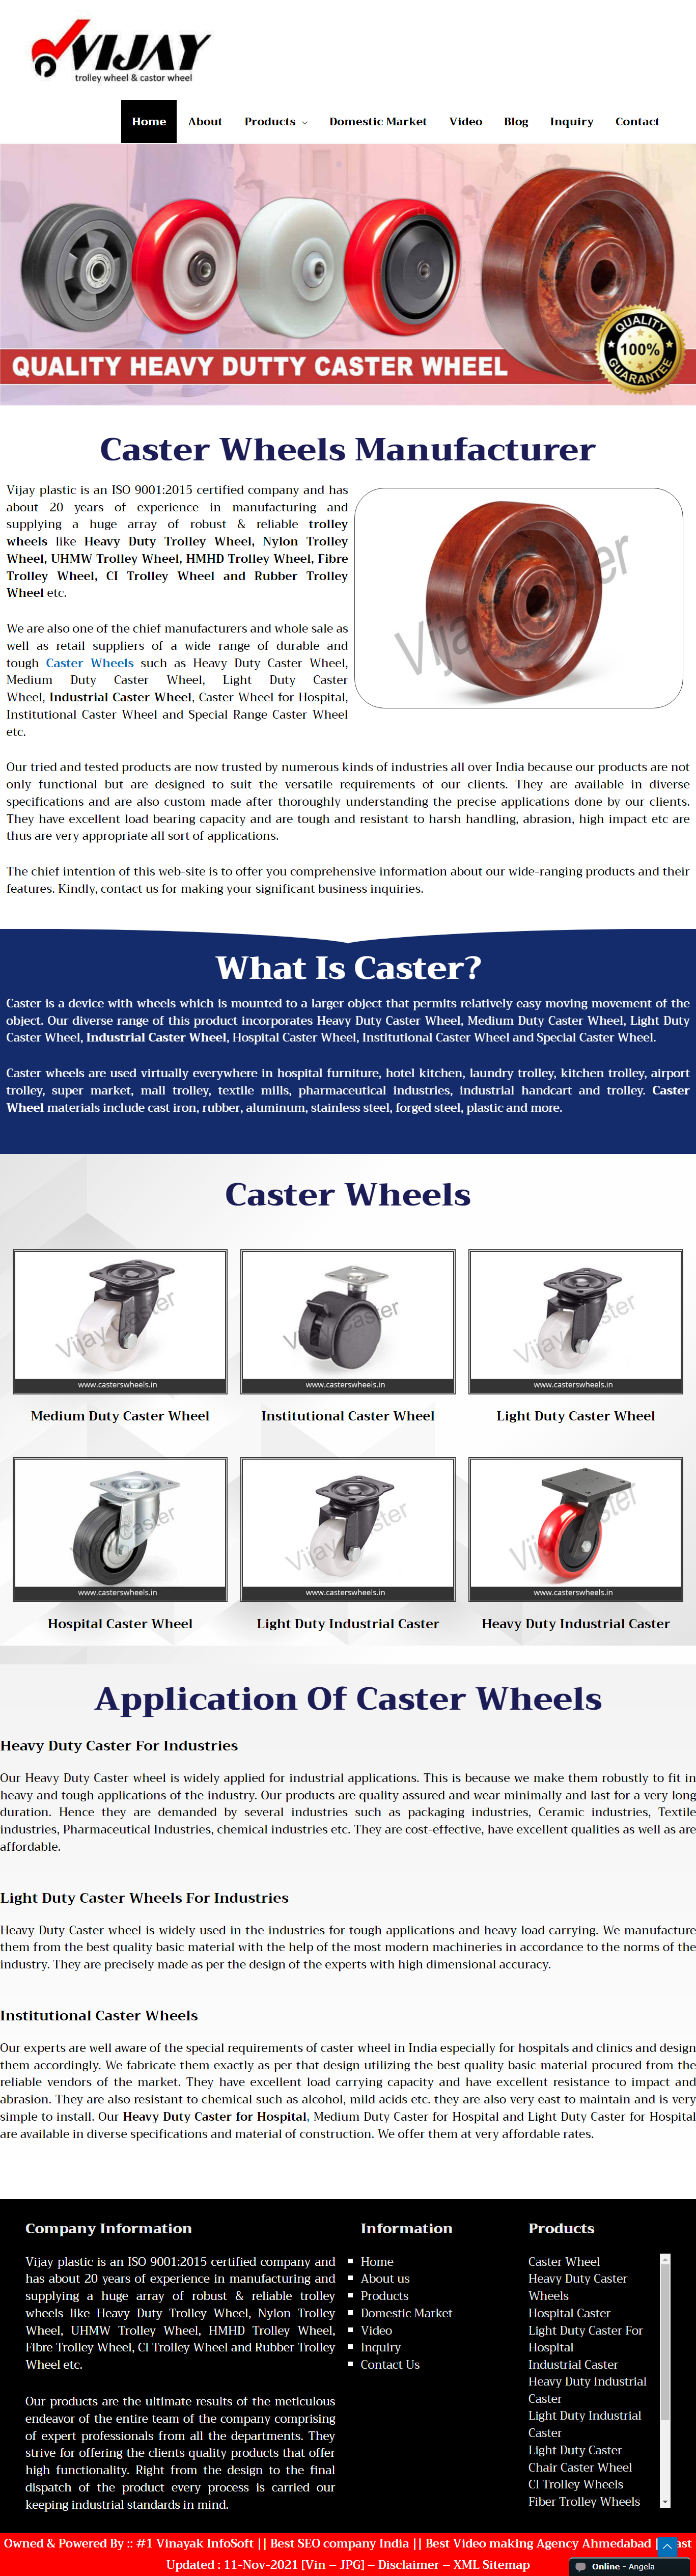 Casters Wheels